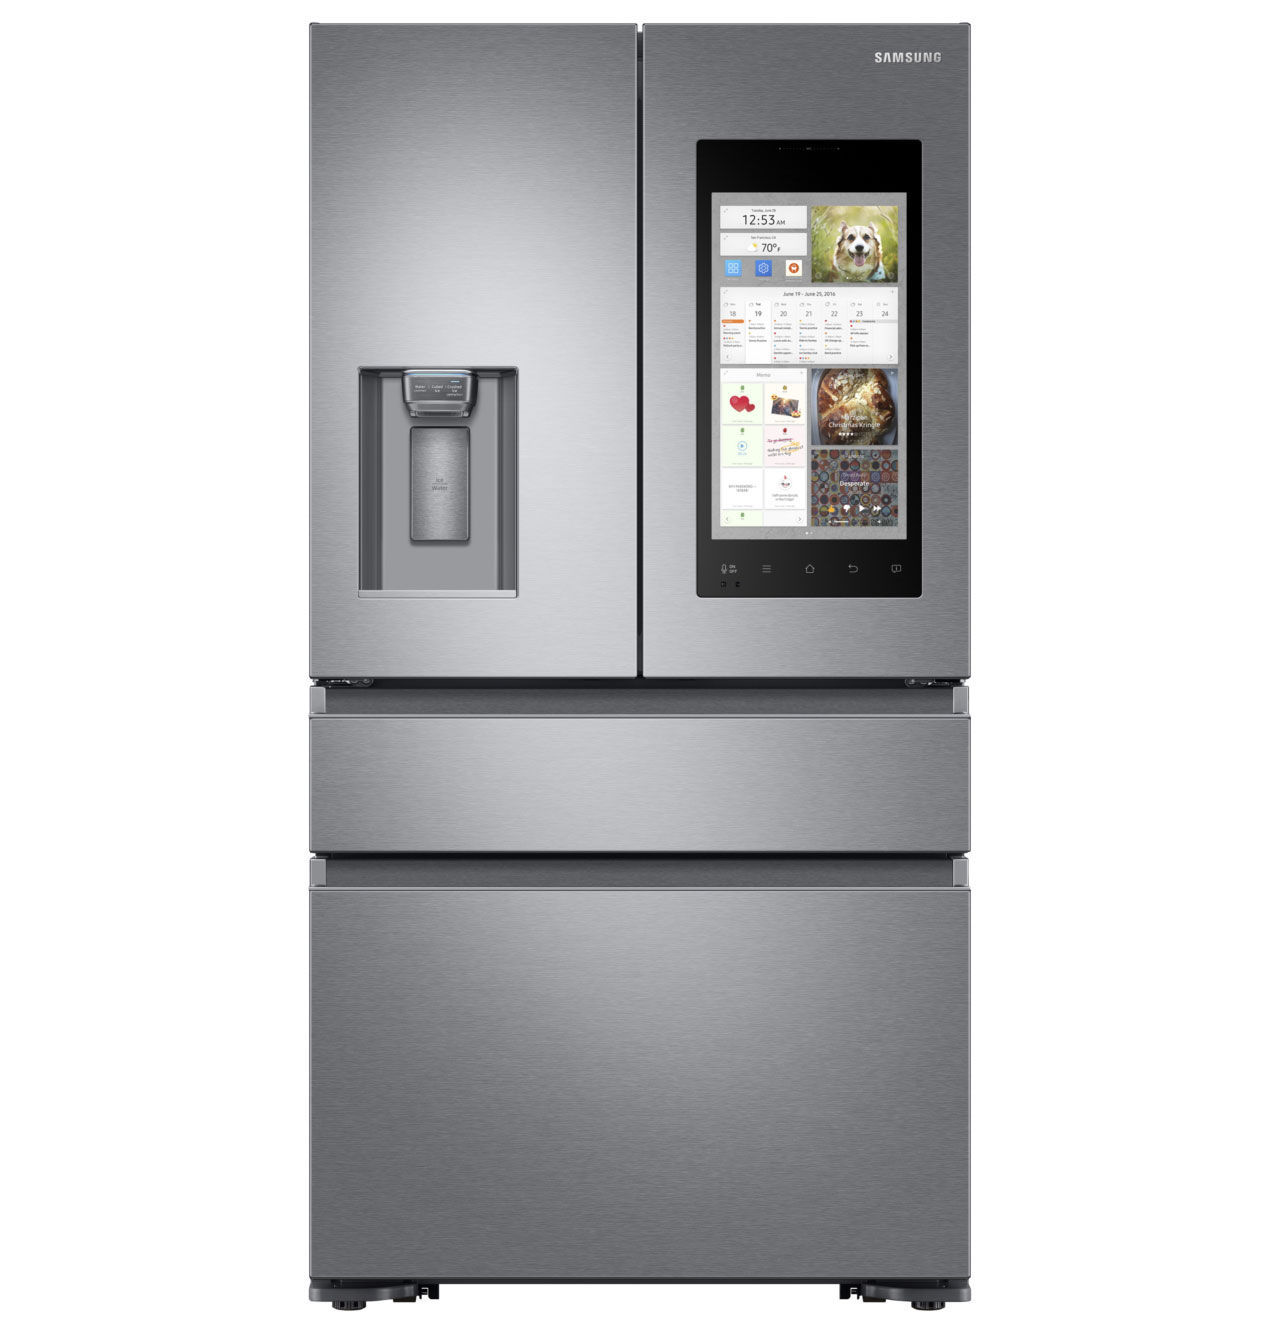 Amazon ryktas utveckla smart kylskåp